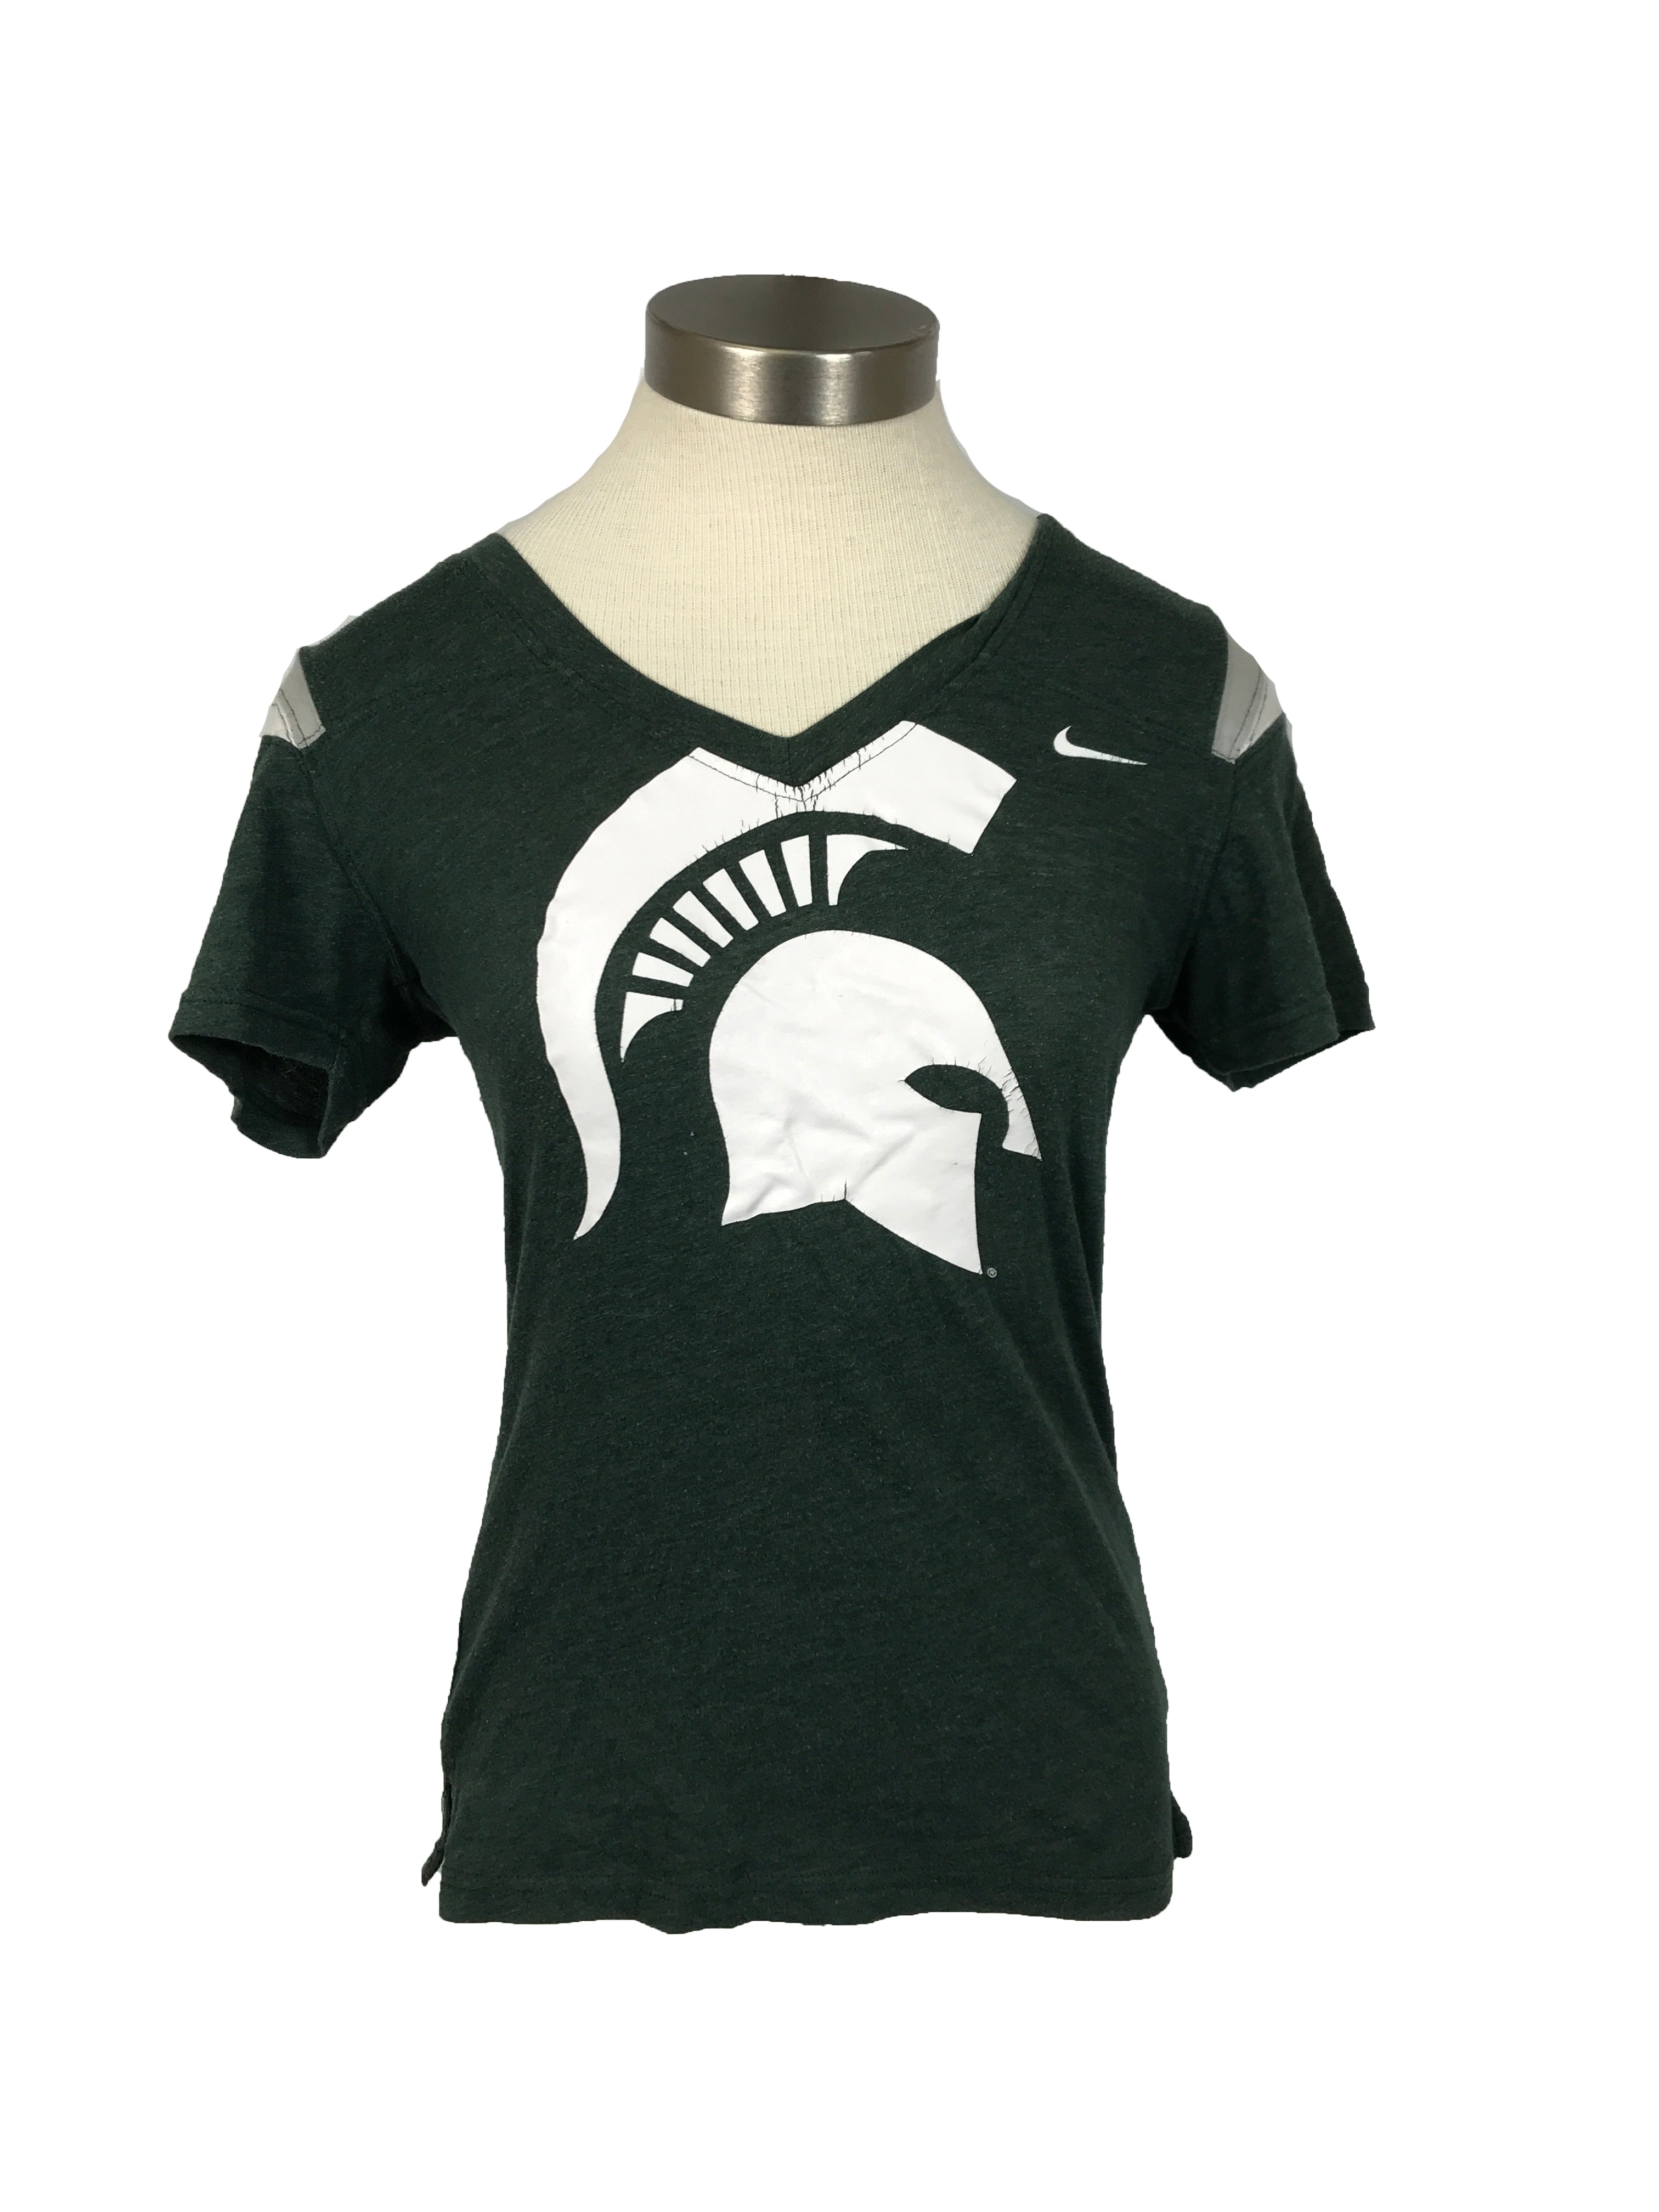 Nike Green Michigan State V-Neck T-Shirt Women's Size S